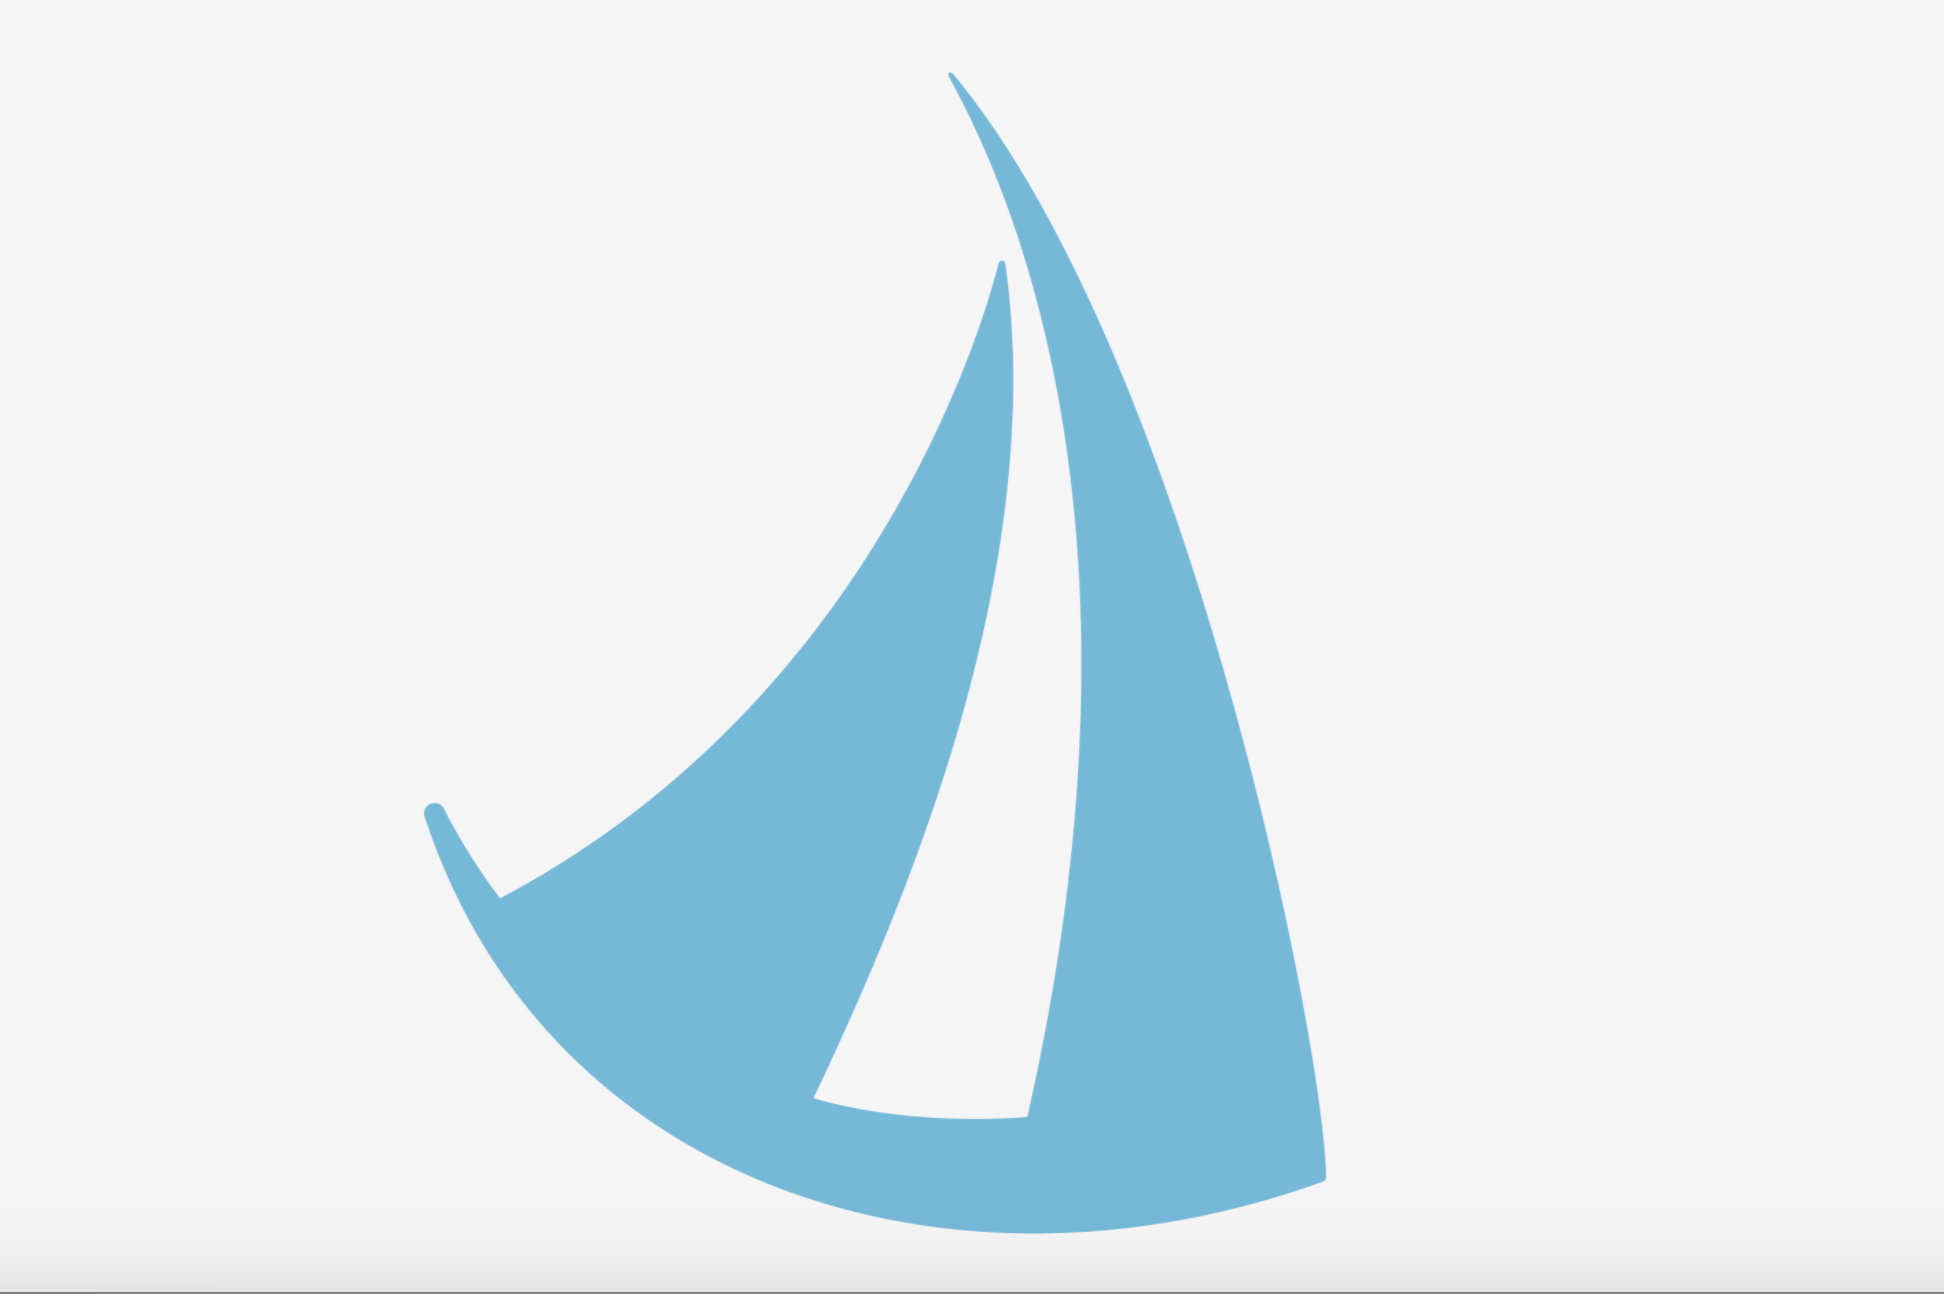 Jacht logo